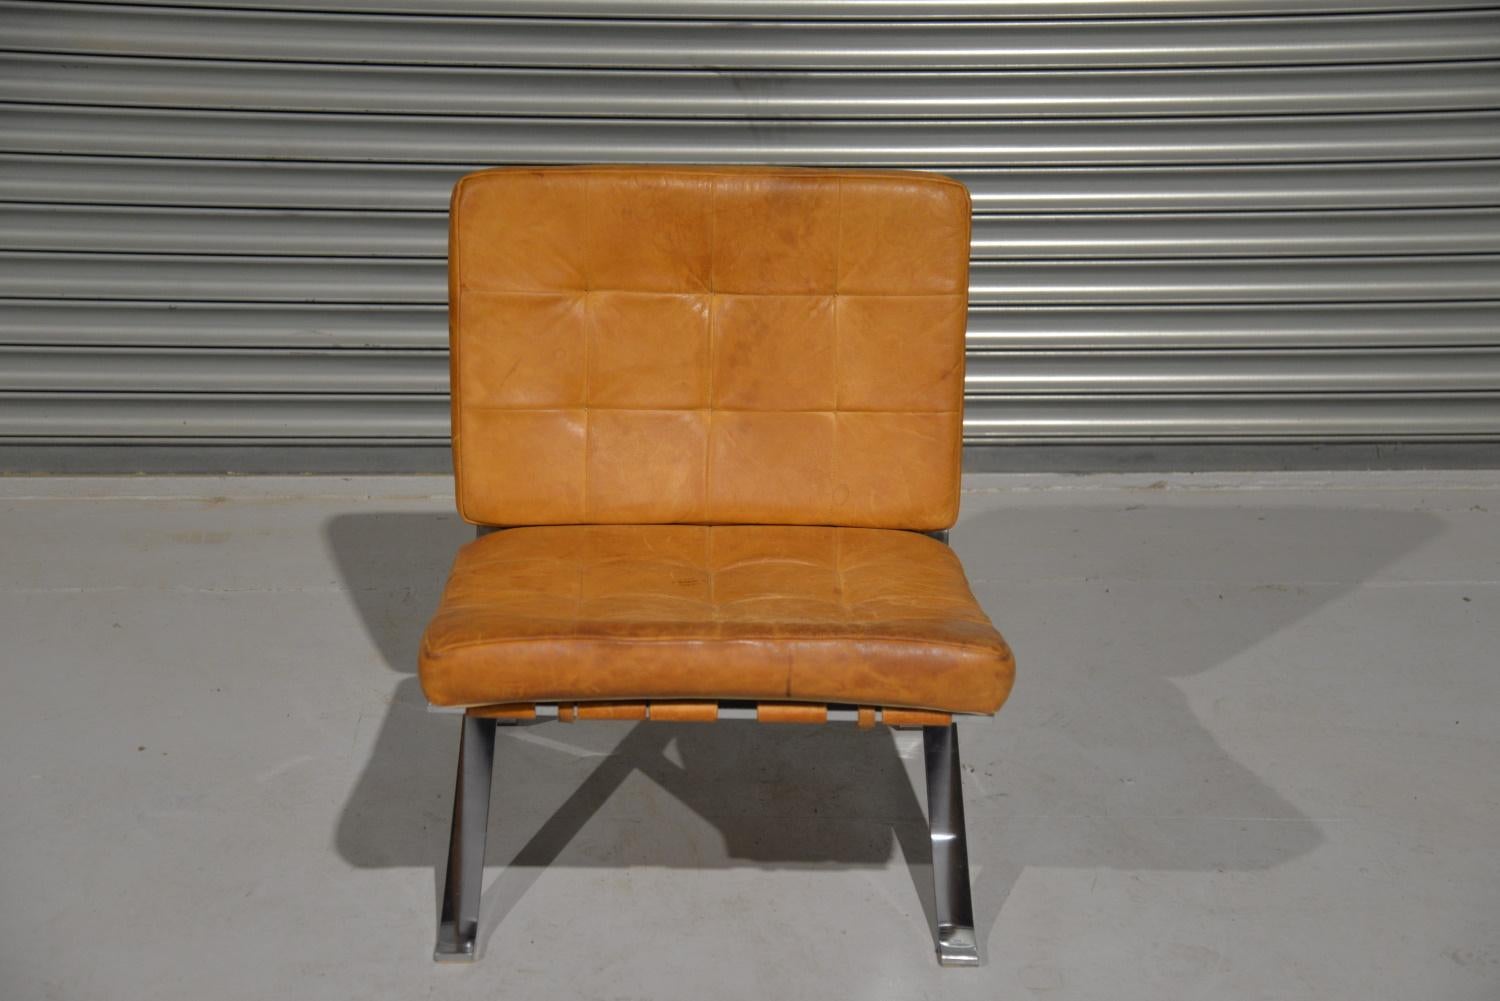 Vintage Rh-301 Lounge Chair by Robert Haussmann for De Sede, Switzerland, 1954 For Sale 5